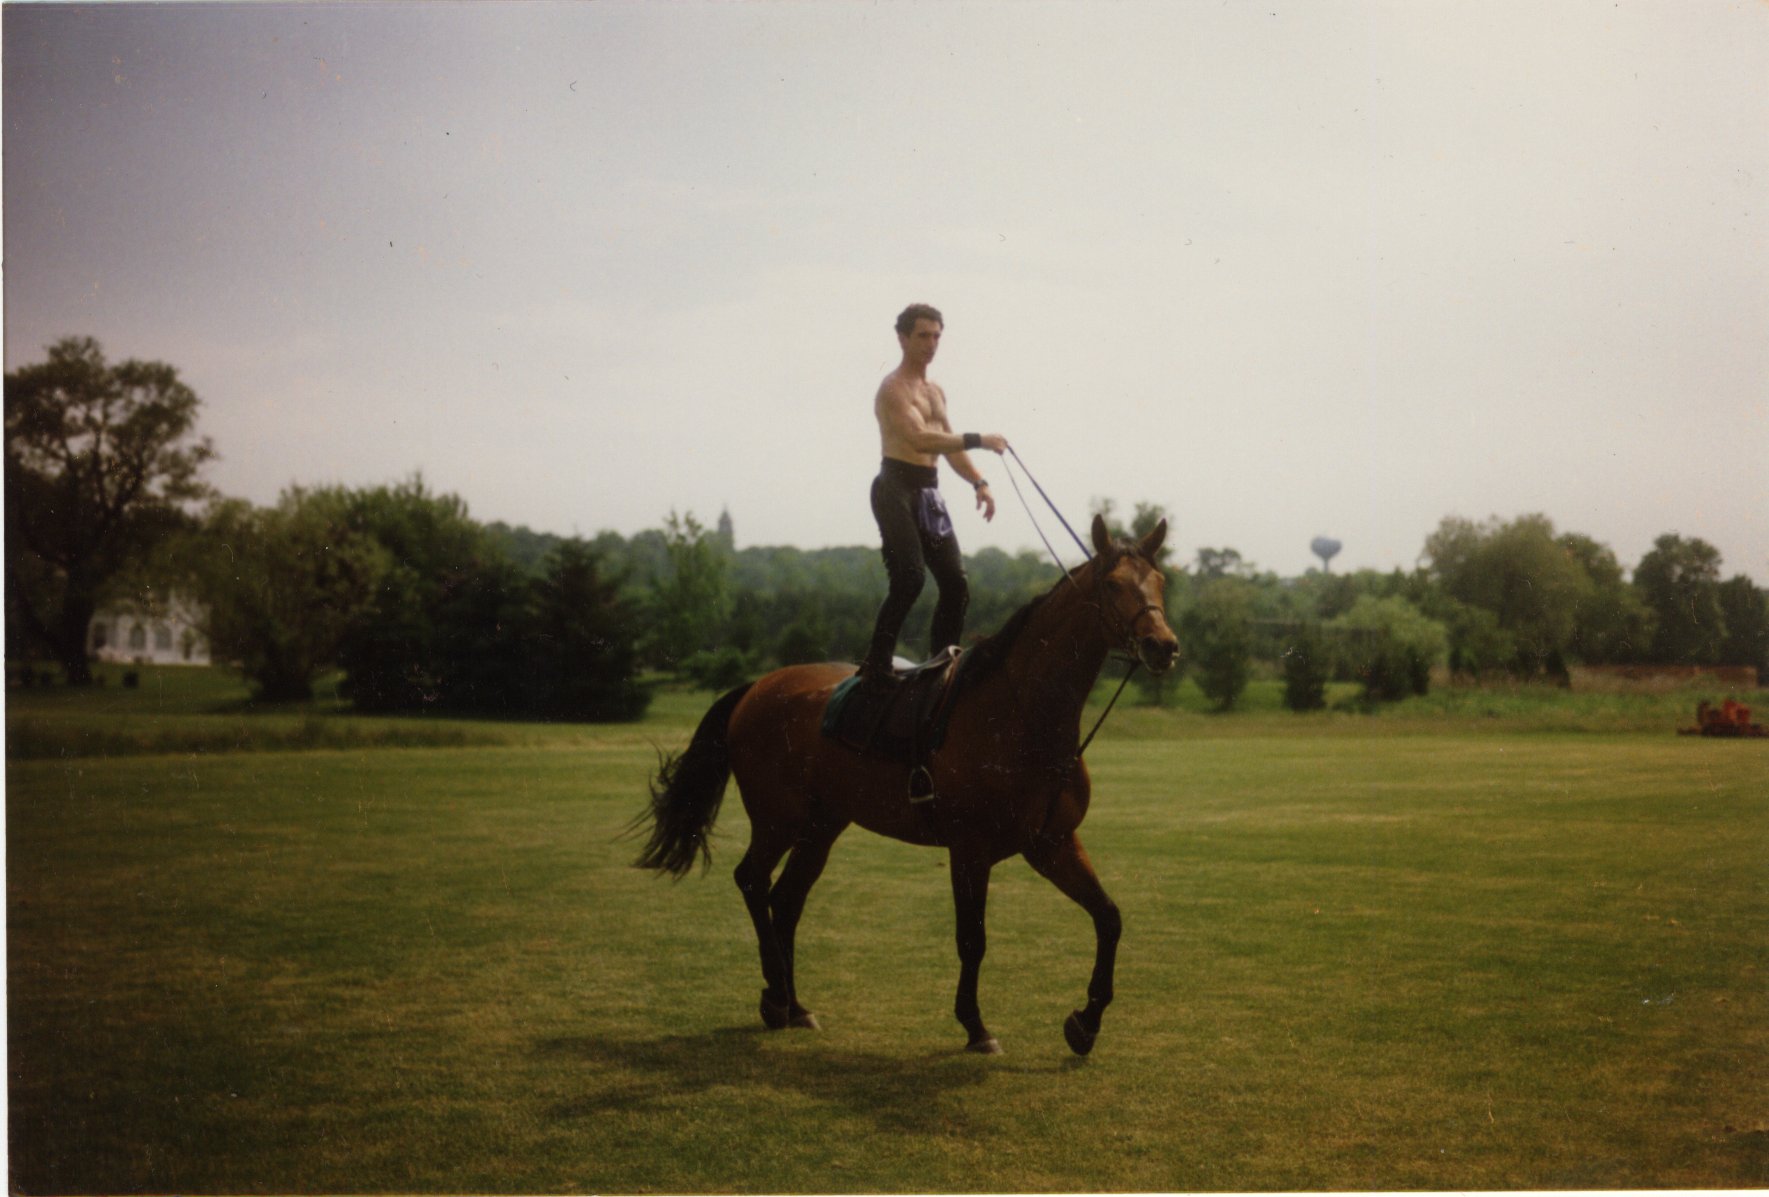 David and his horse Cinbad.